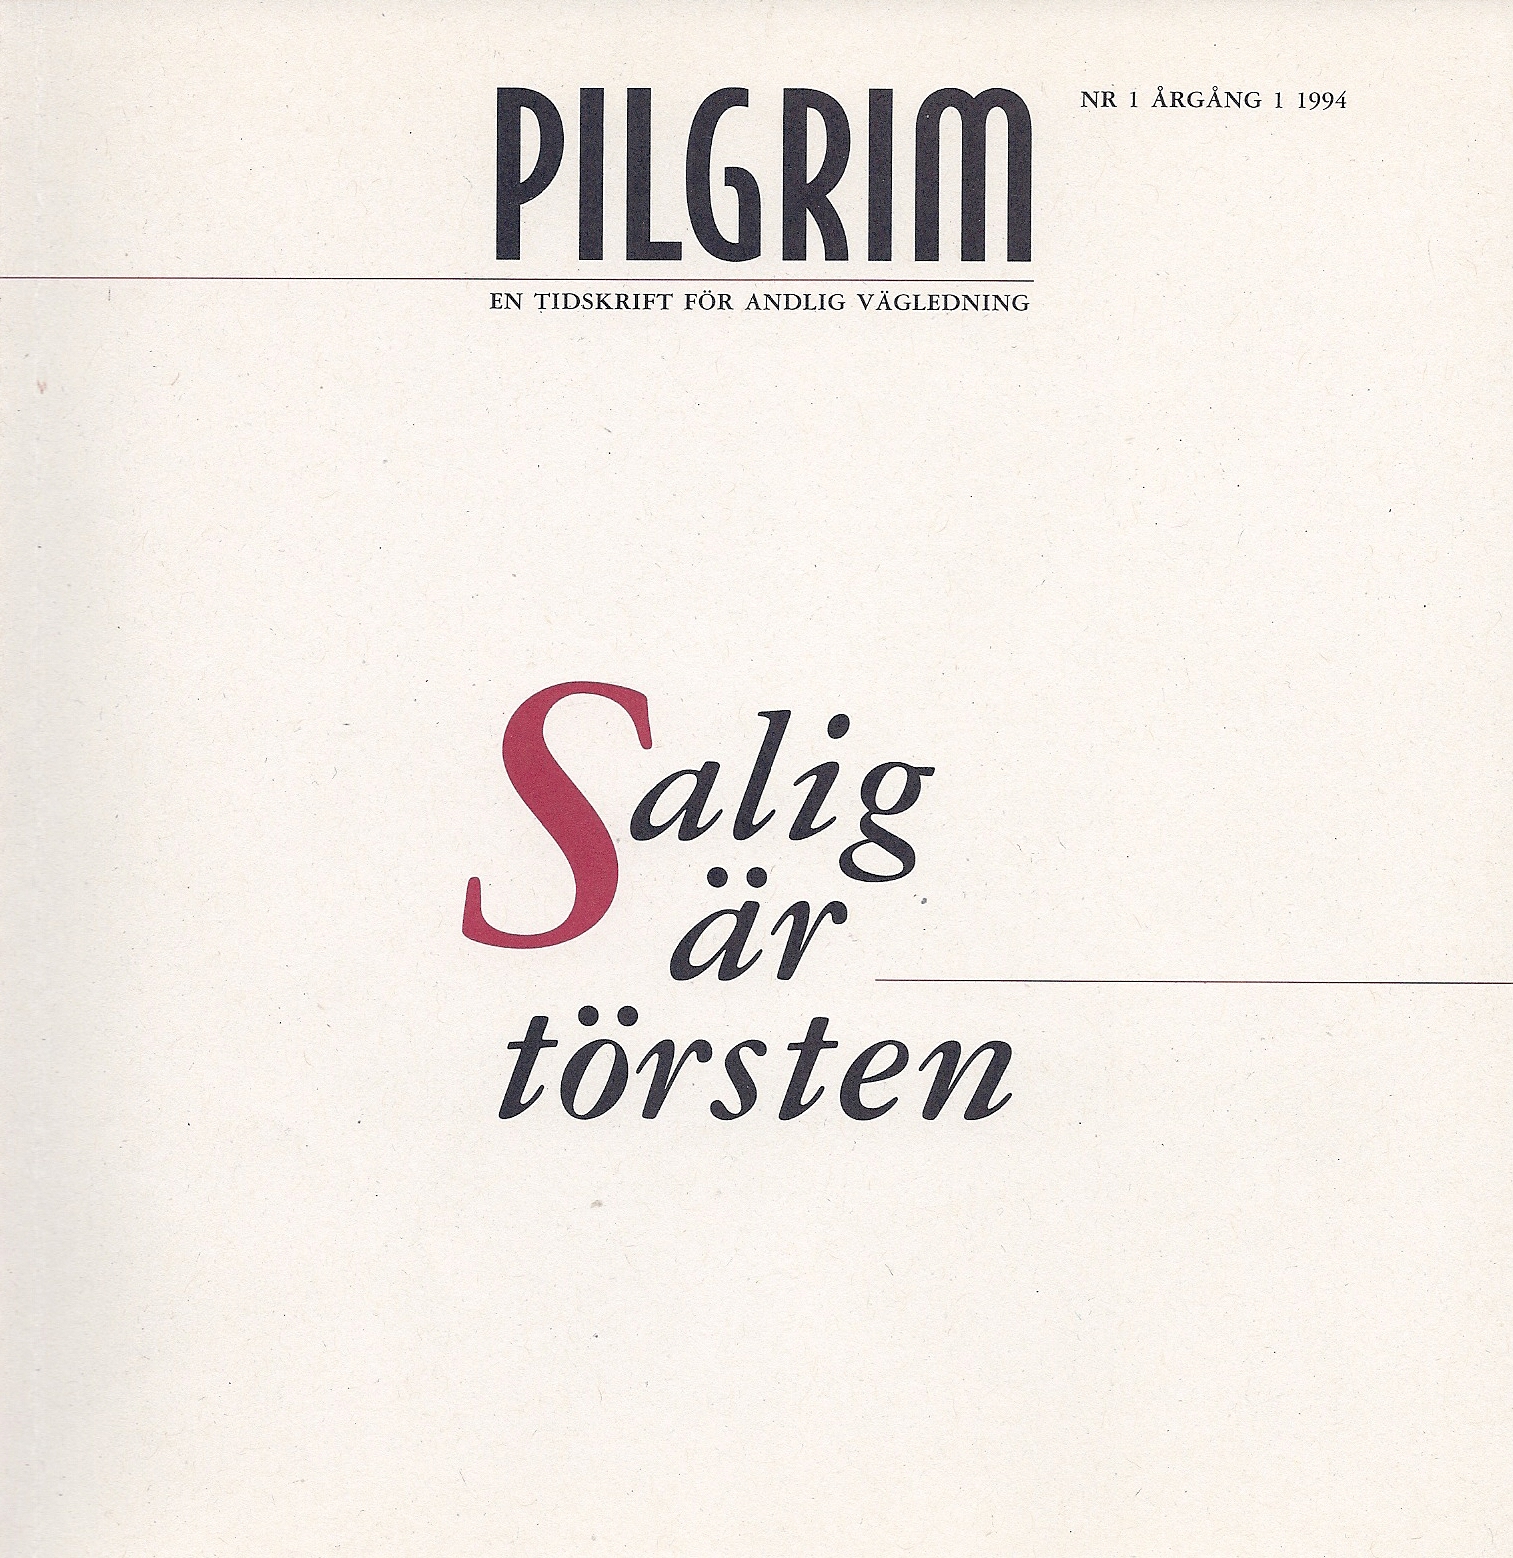 Pilgrim frams 1994-1